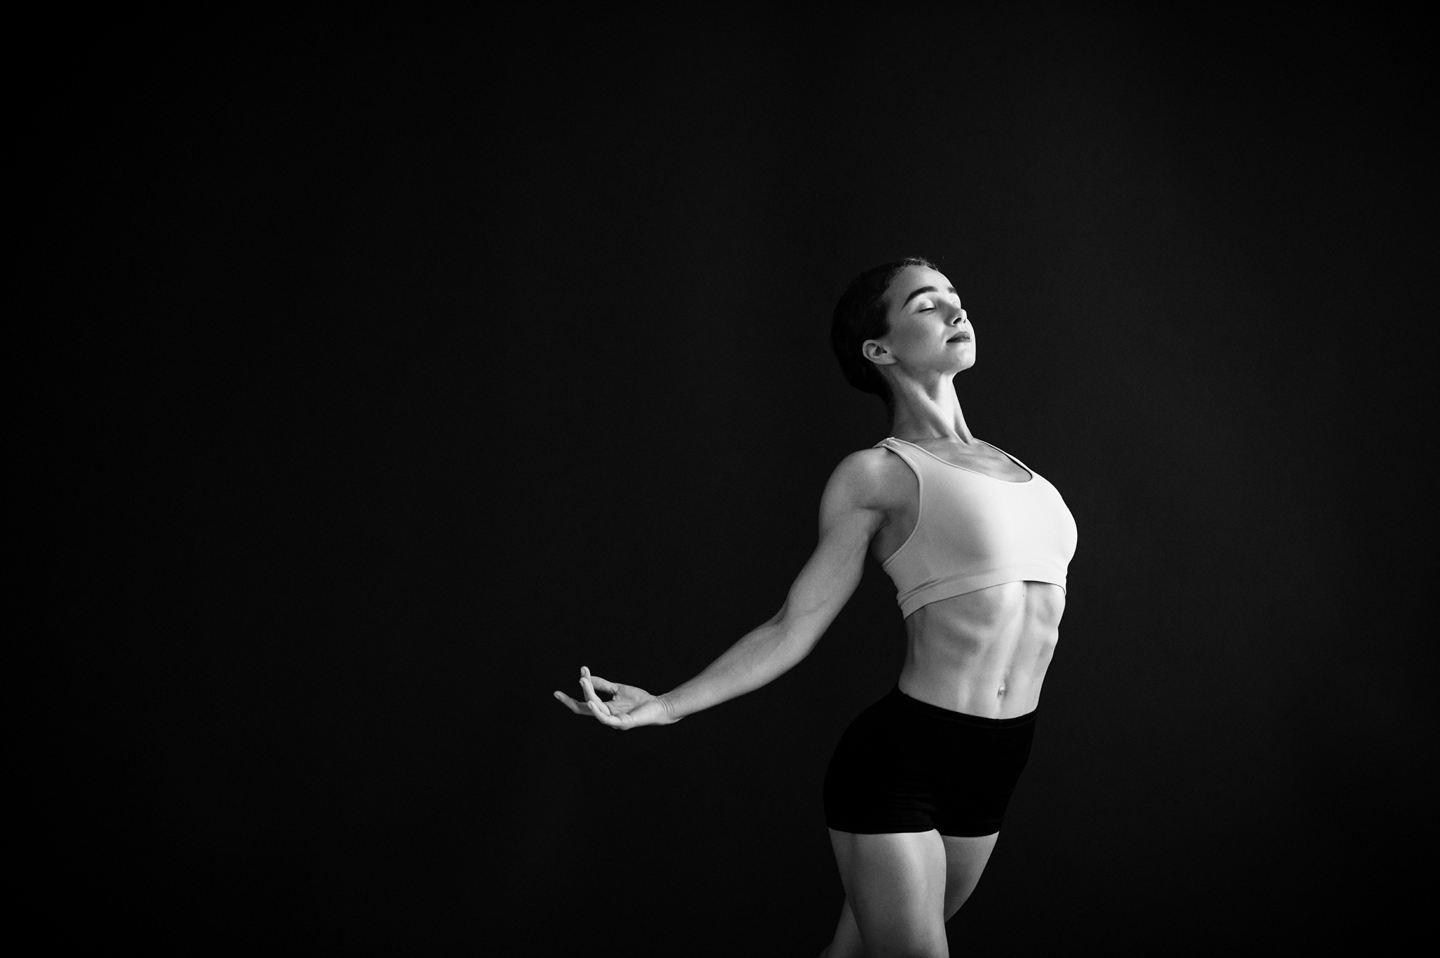 Los Angeles Dance Portrait Photo - Olga Sokolova - by Tommy Xing Photography 02.JPG